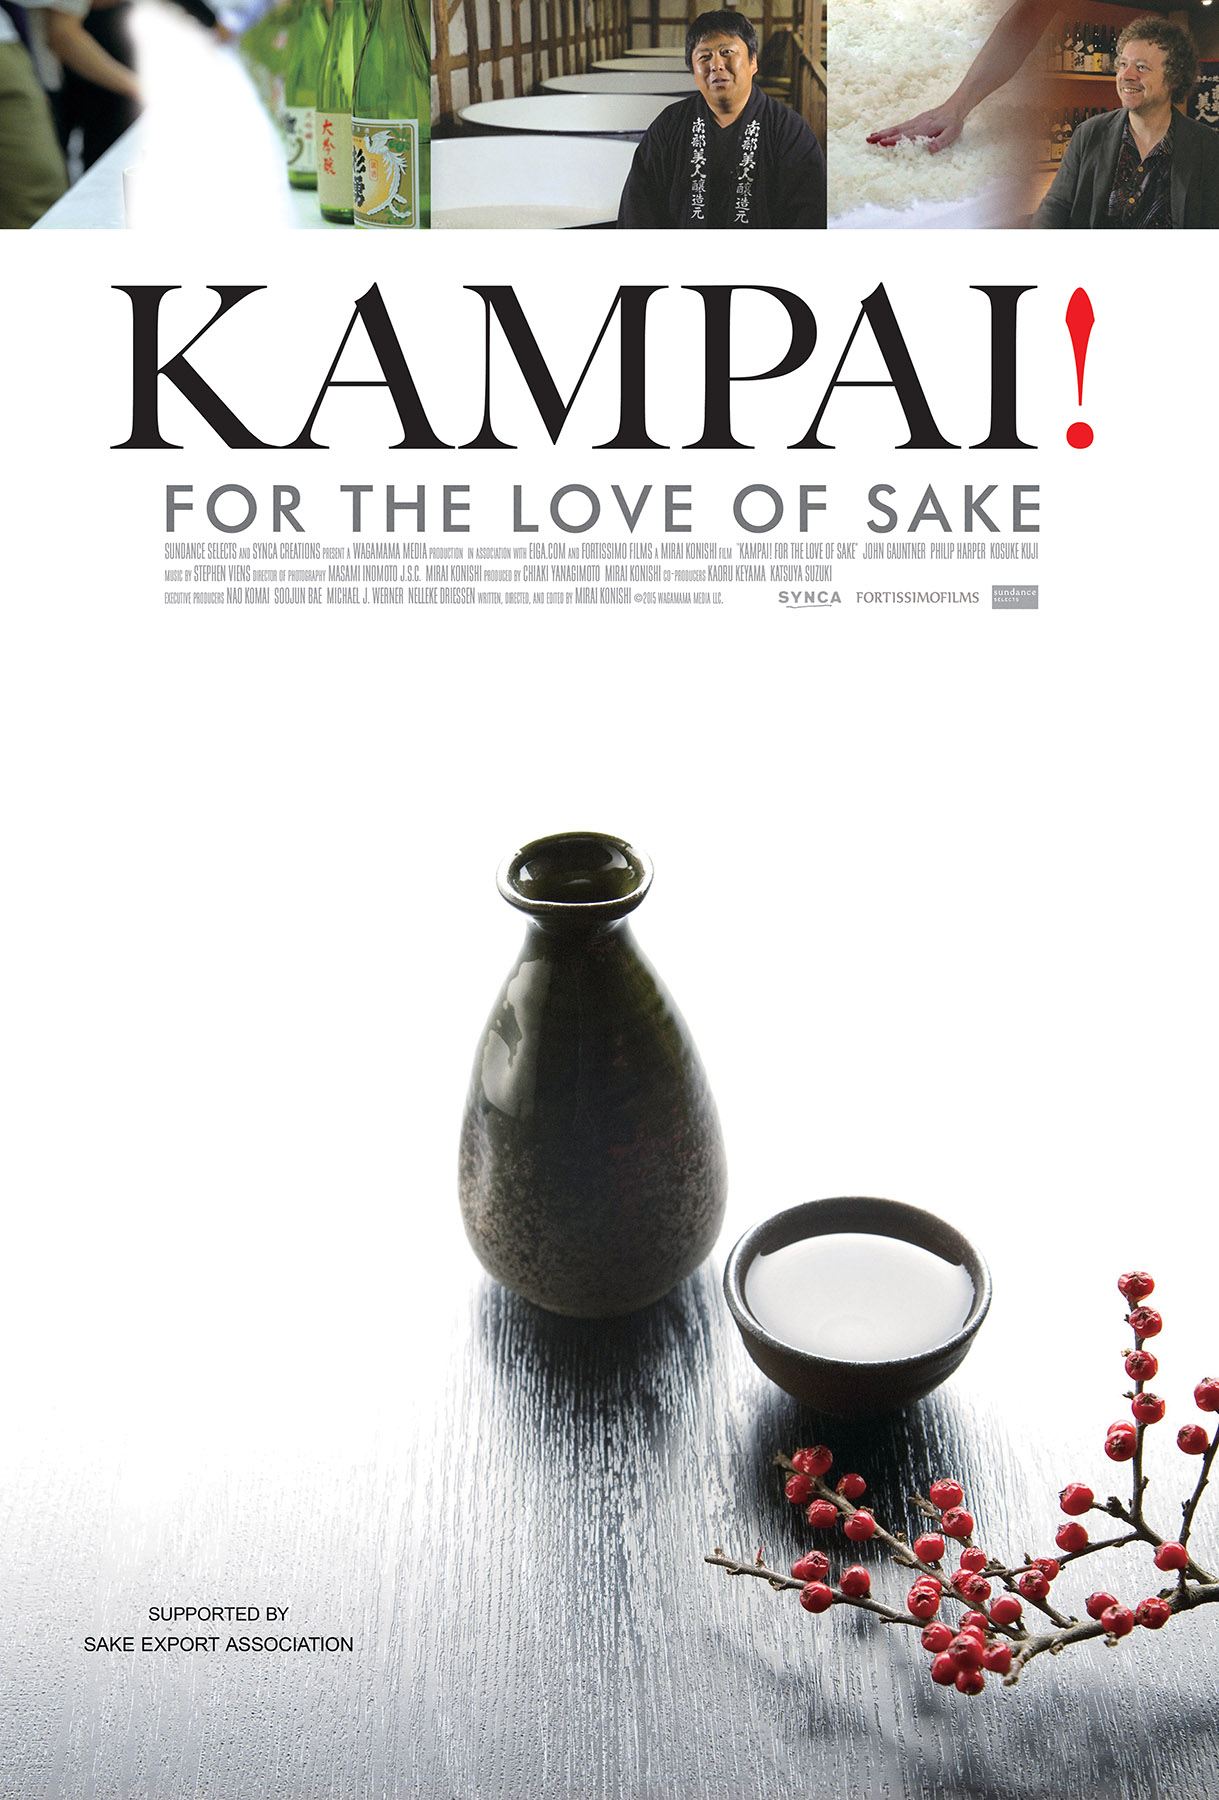 Kampai! For the Love of Sake